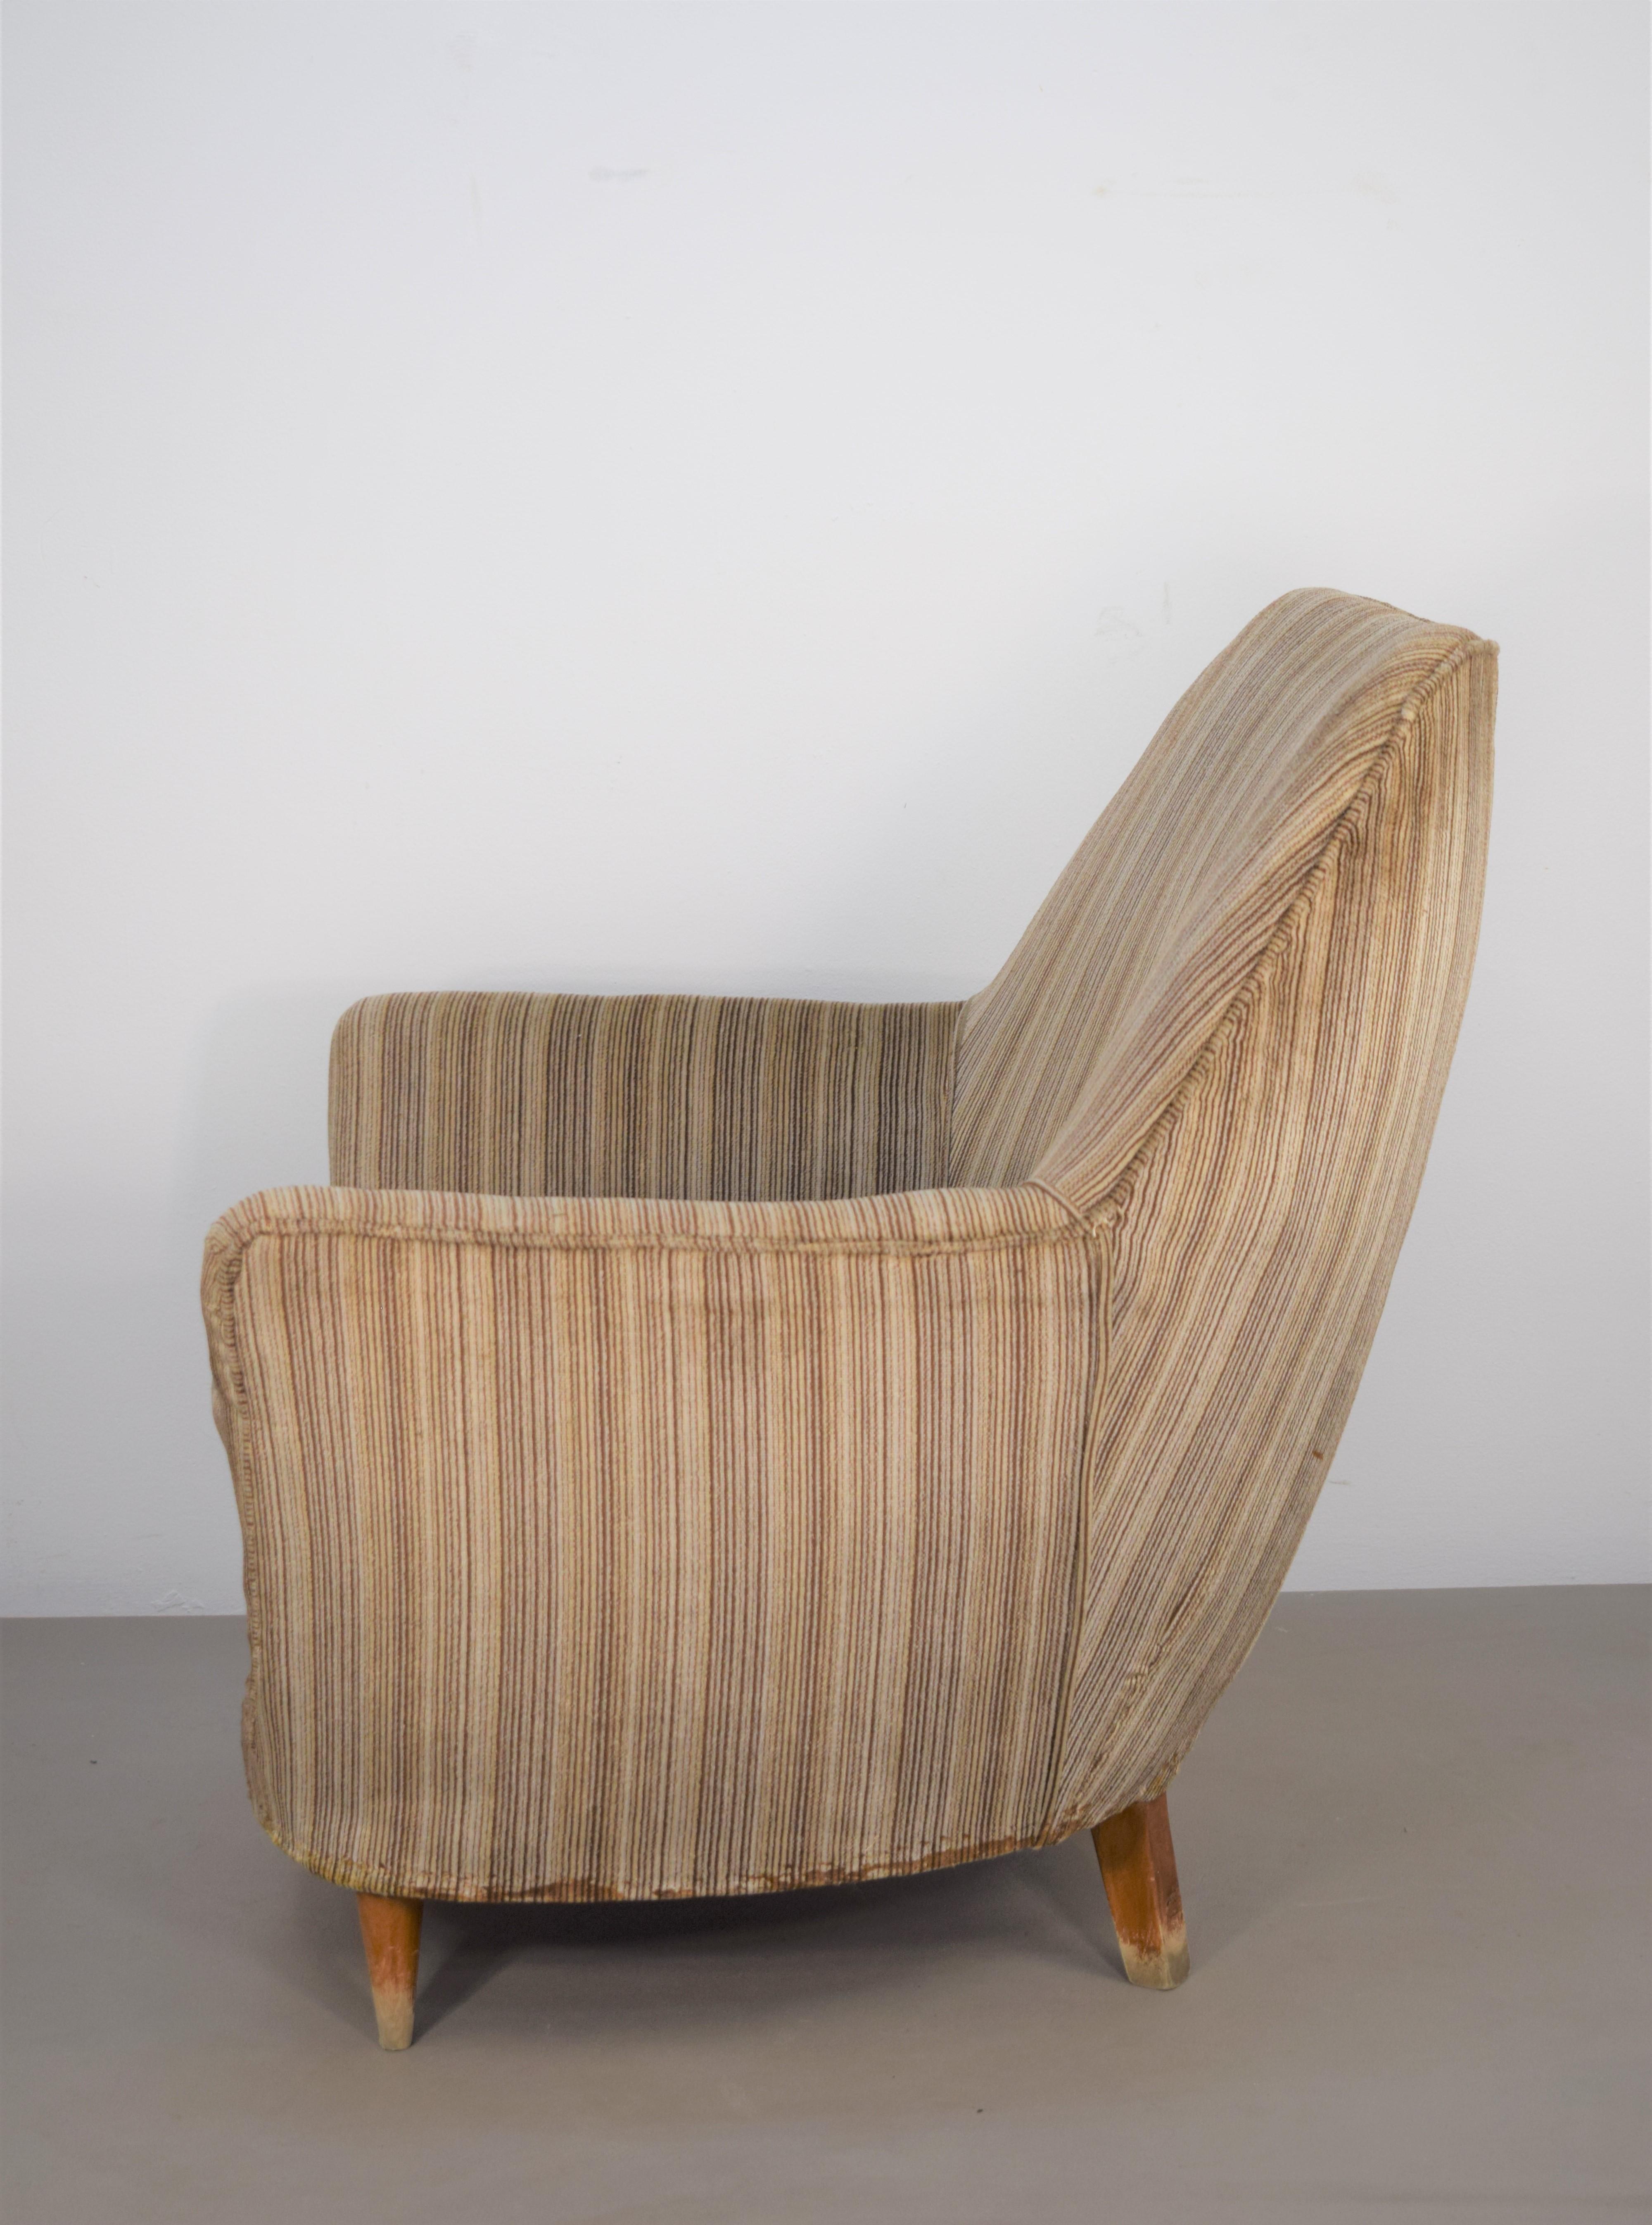 Italian armchair, 1950s.
Dimensions: H= 86 cm; W= 77 cm; D= 82 cm; H seat= 40 cm.